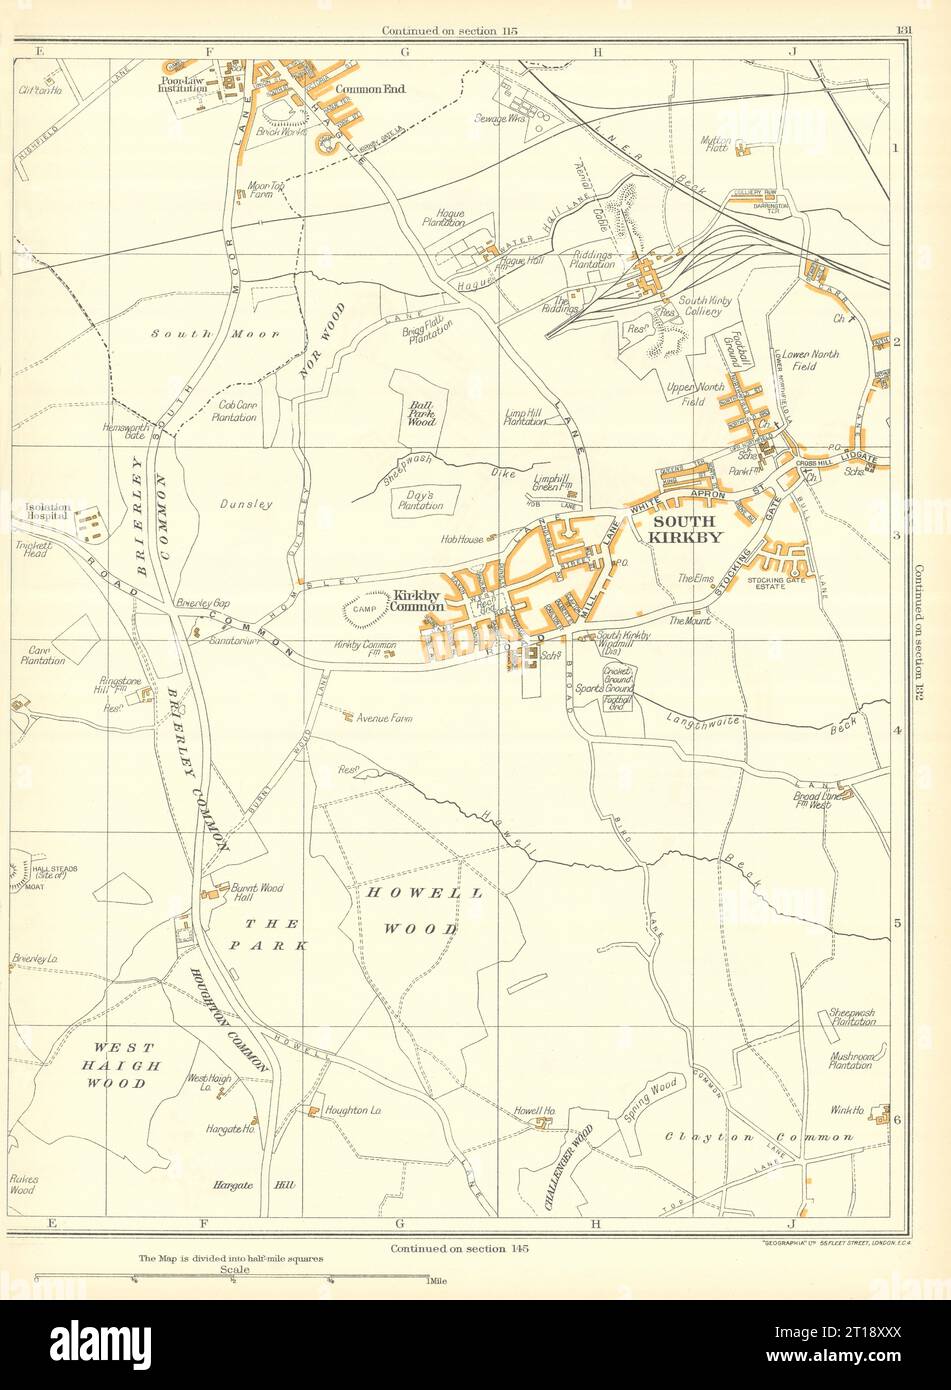 SOUTH KIRKBY Grimethorpe Hemsworth Moorthorpe Howell Wood Kirkby Cmn 1935 map Stock Photo